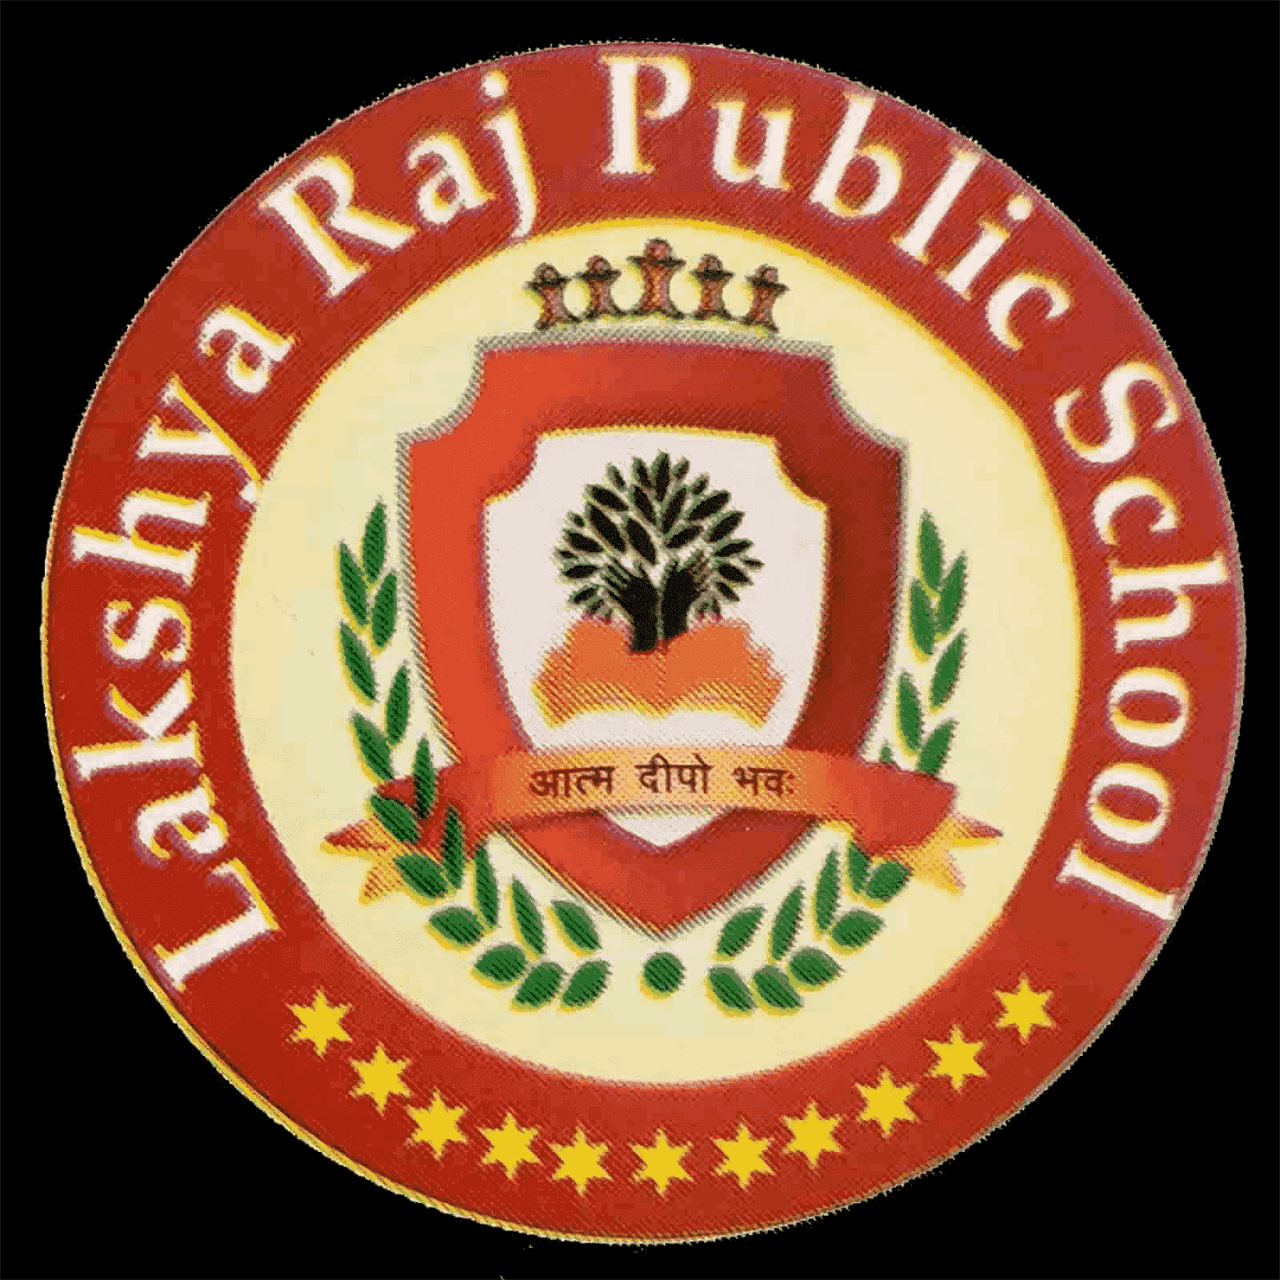 Lakshya Raj Public School